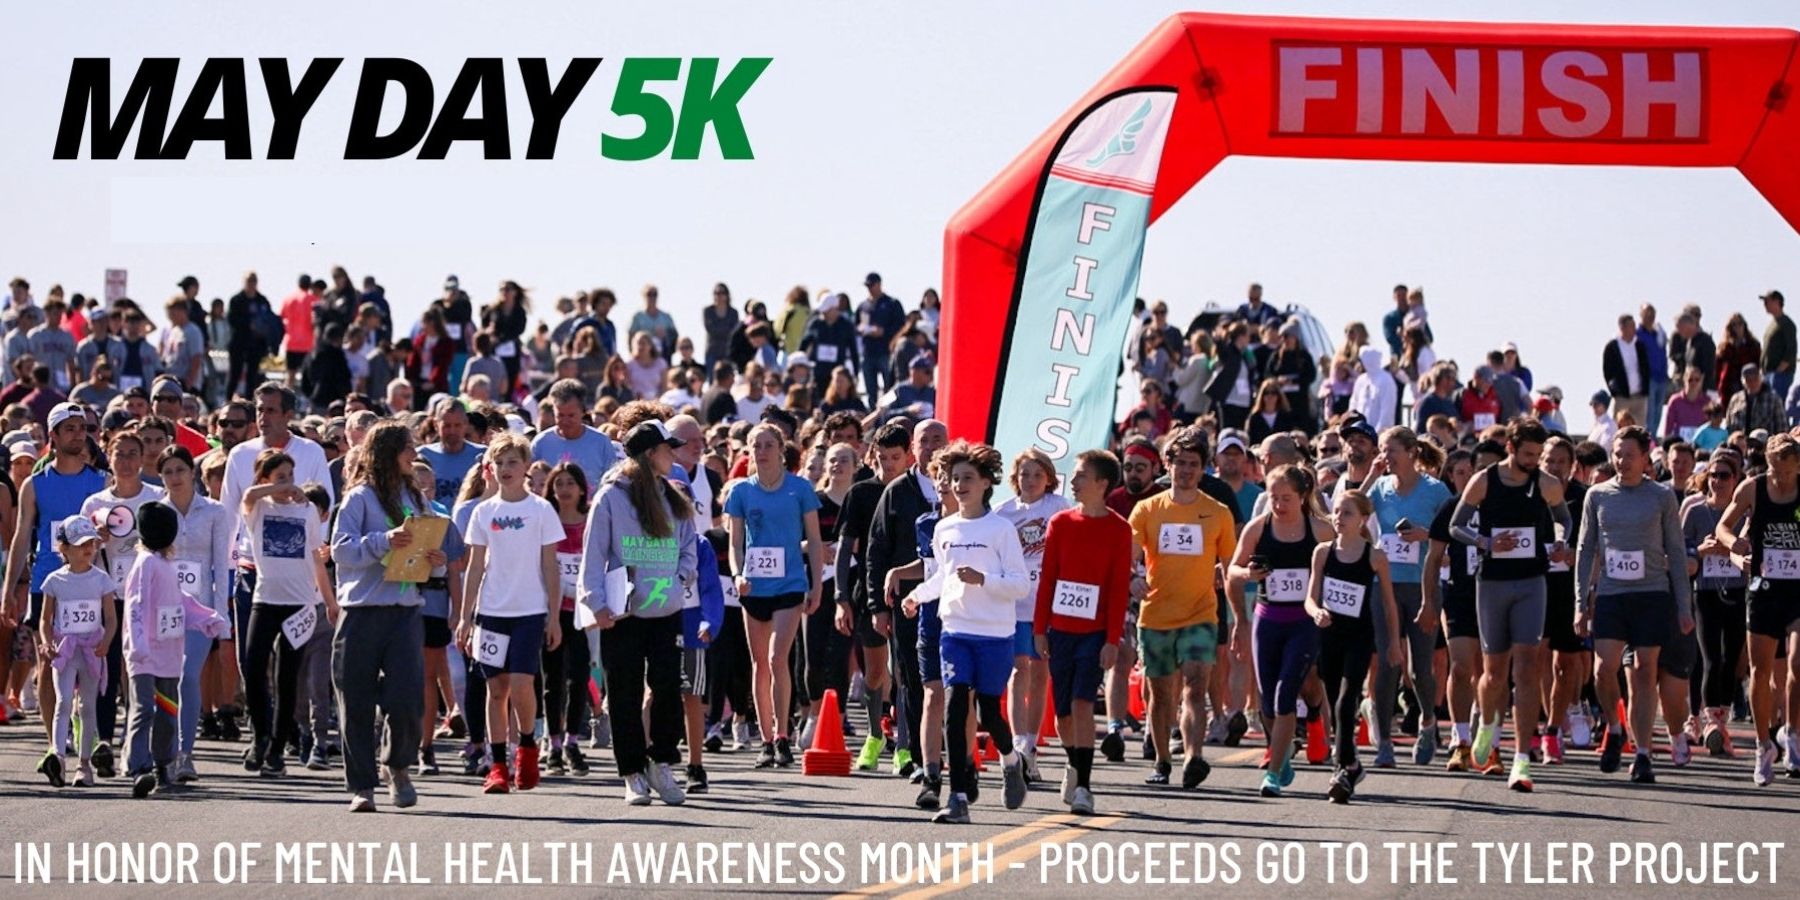 May Day 5K Run/Walk promotional image